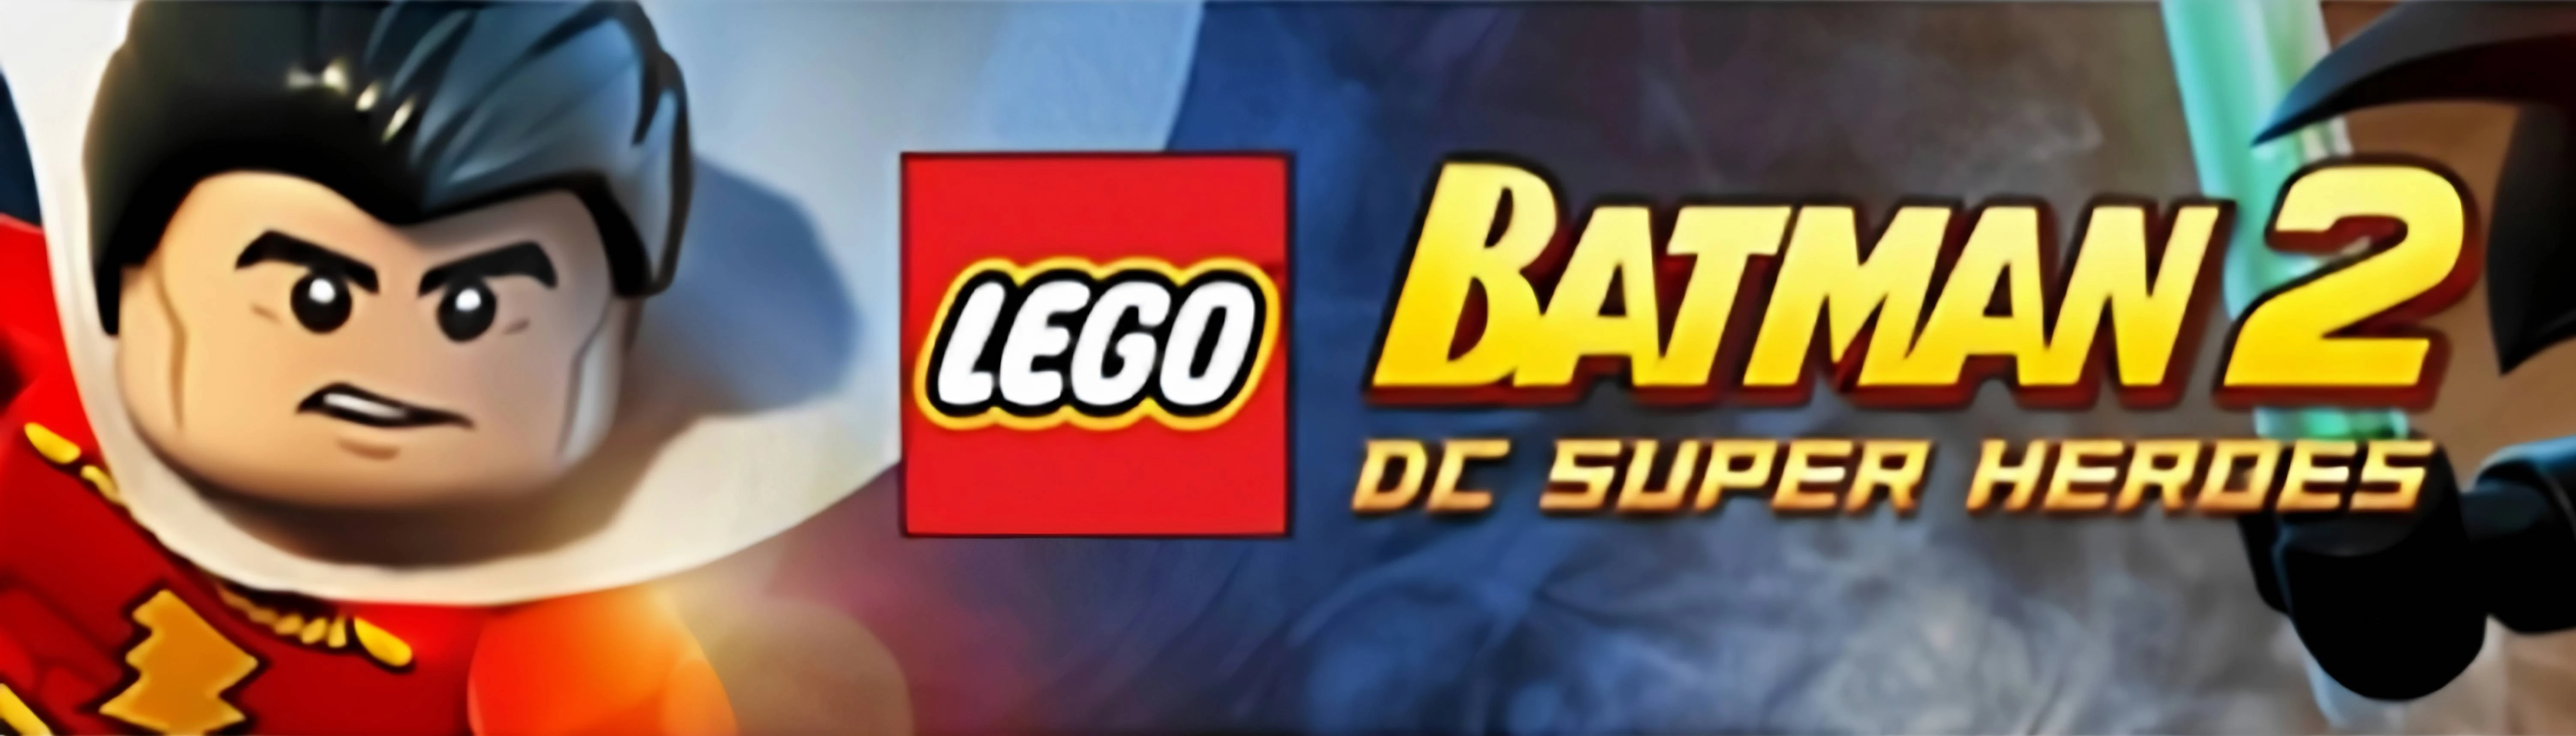 Lego Batman Nexus - Mods and community